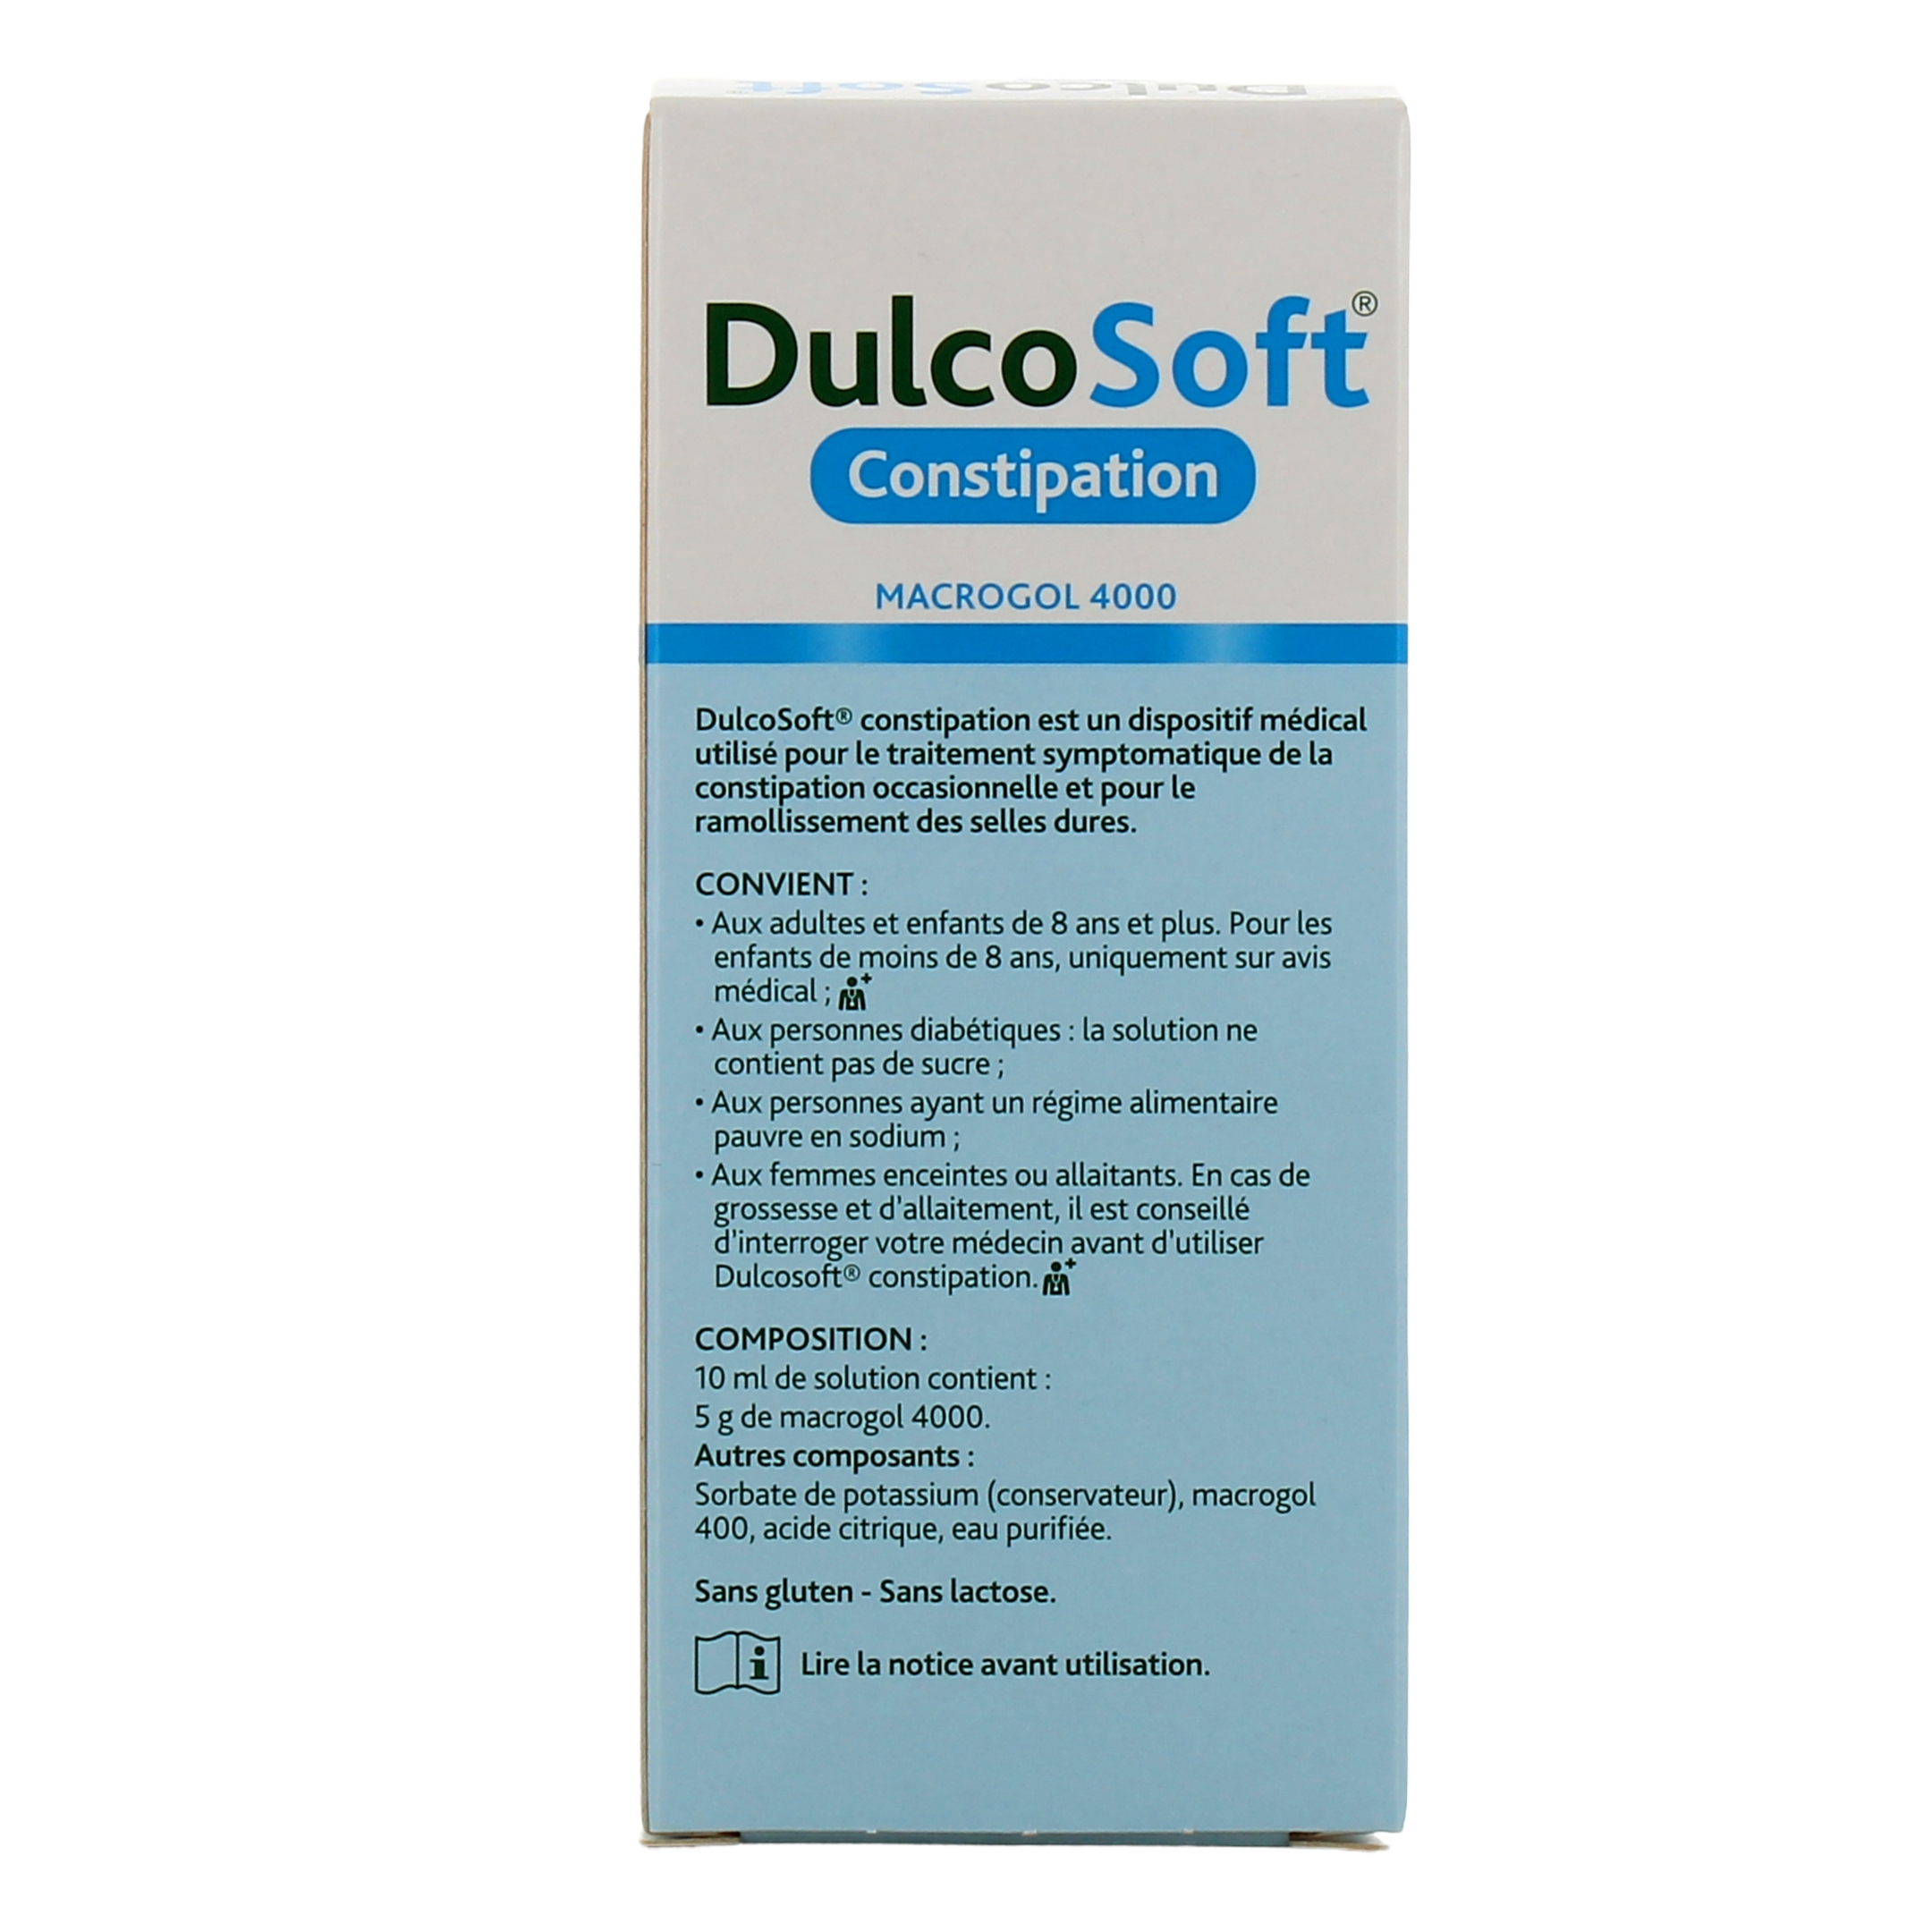 DulcoSoft Laxatif Doux Constipation 100ml